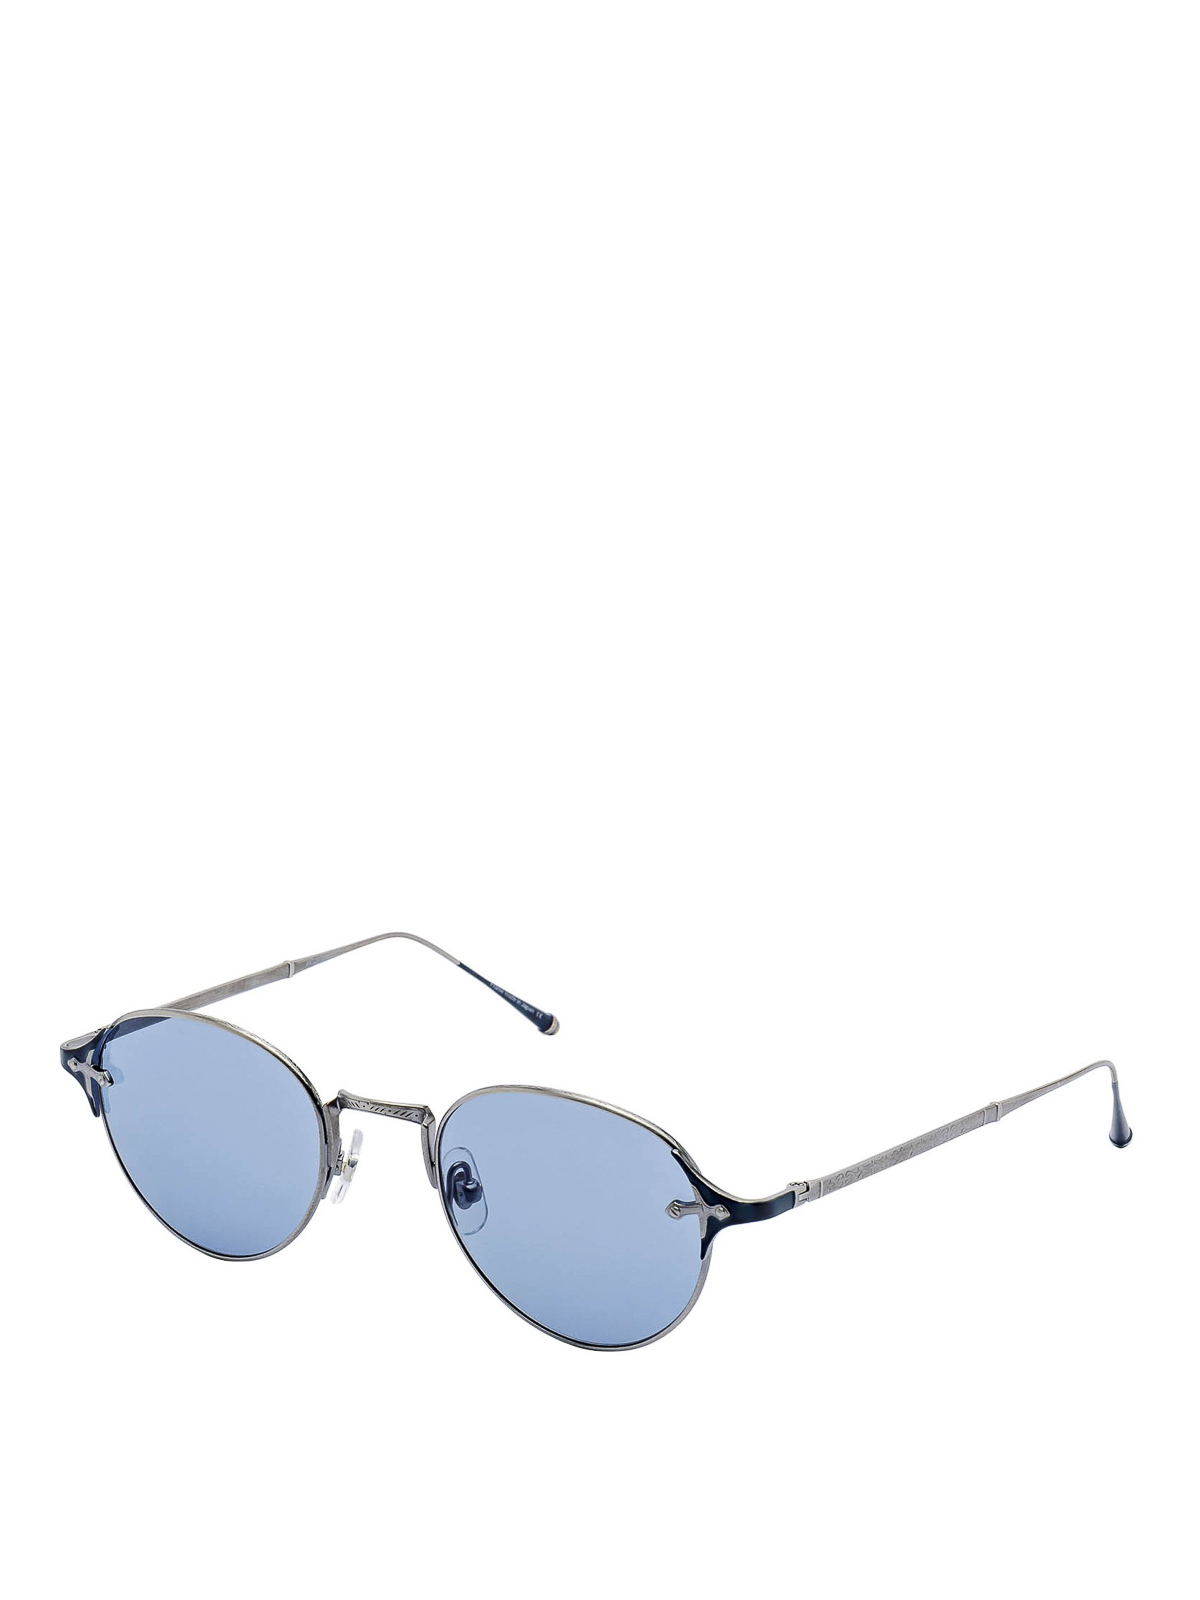 Matsuda 2859h Silver Titanium Sunglasses